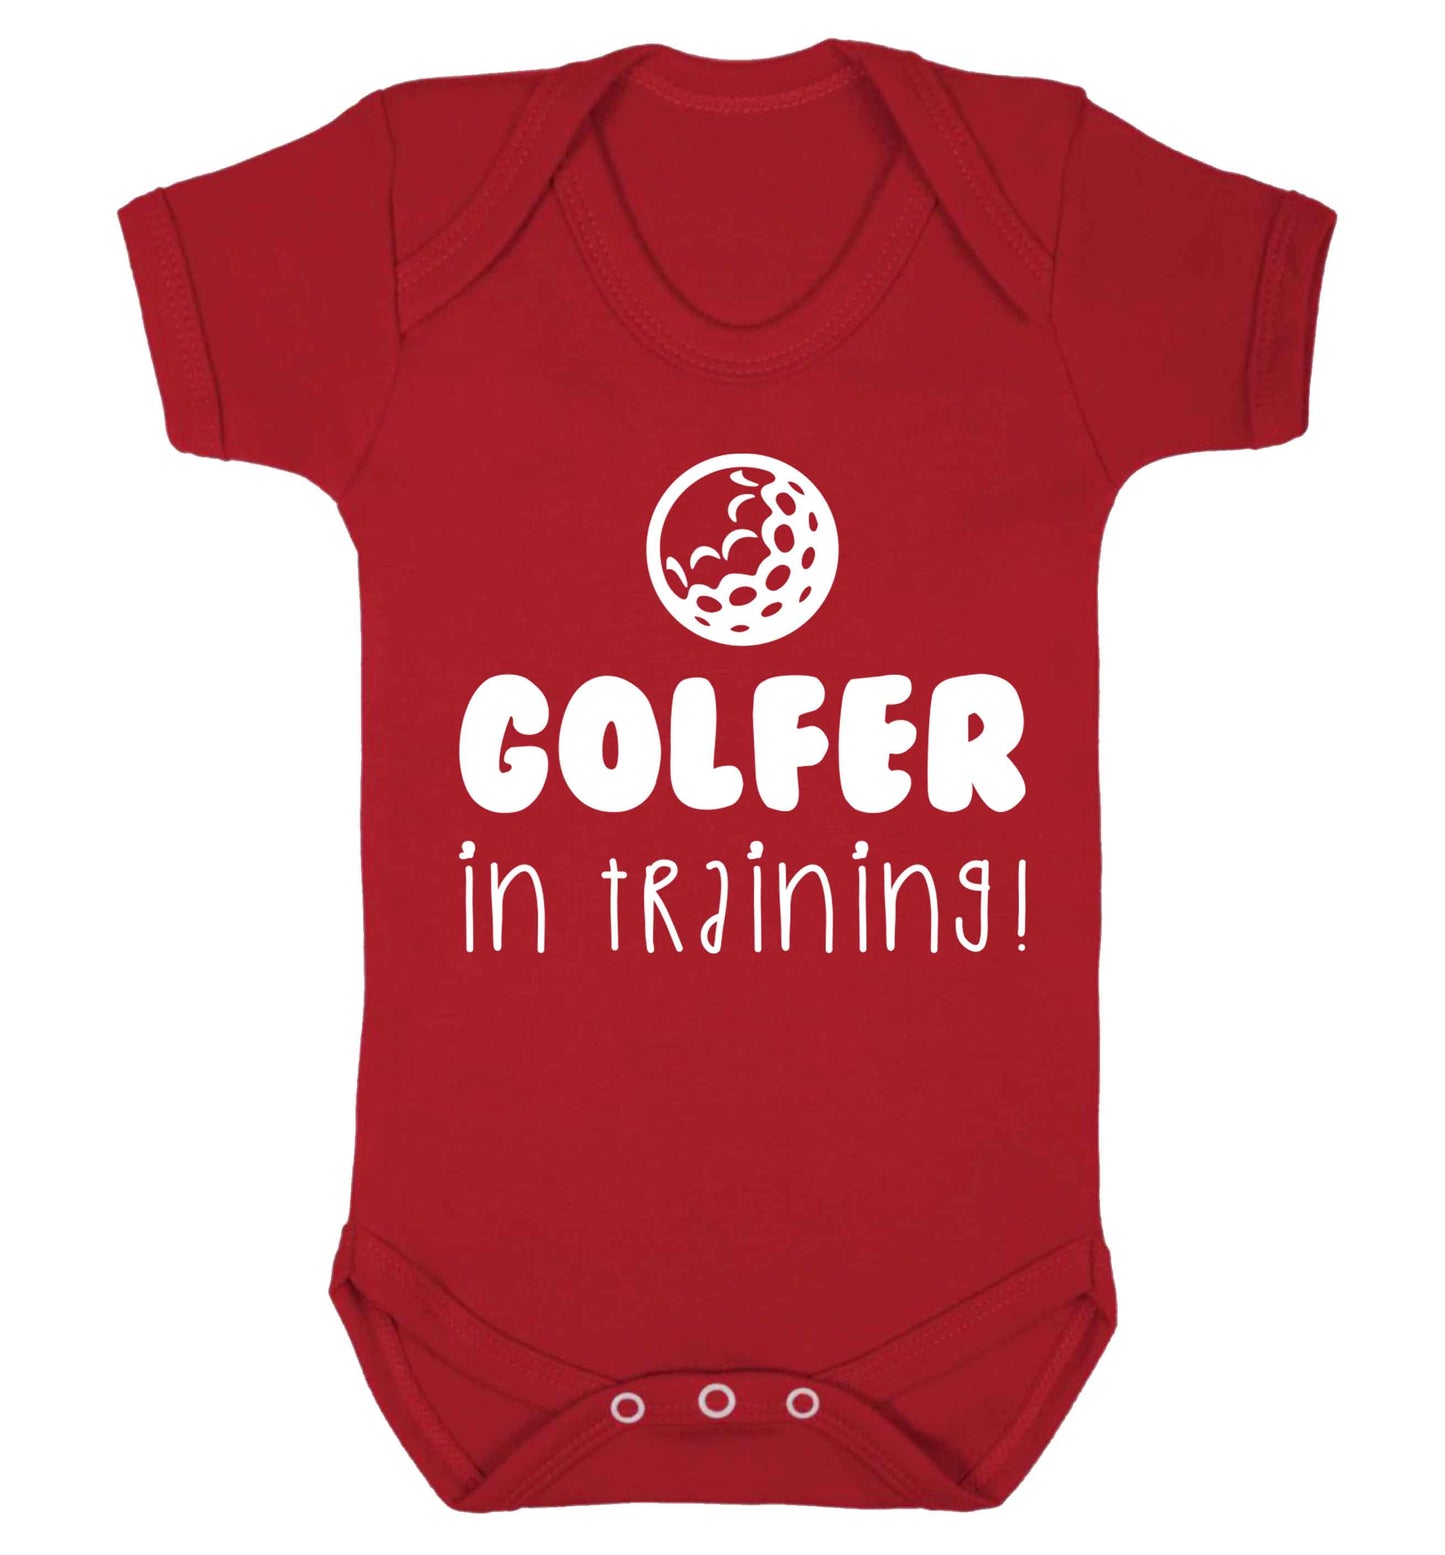 Golfer in training Baby Vest red 18-24 months